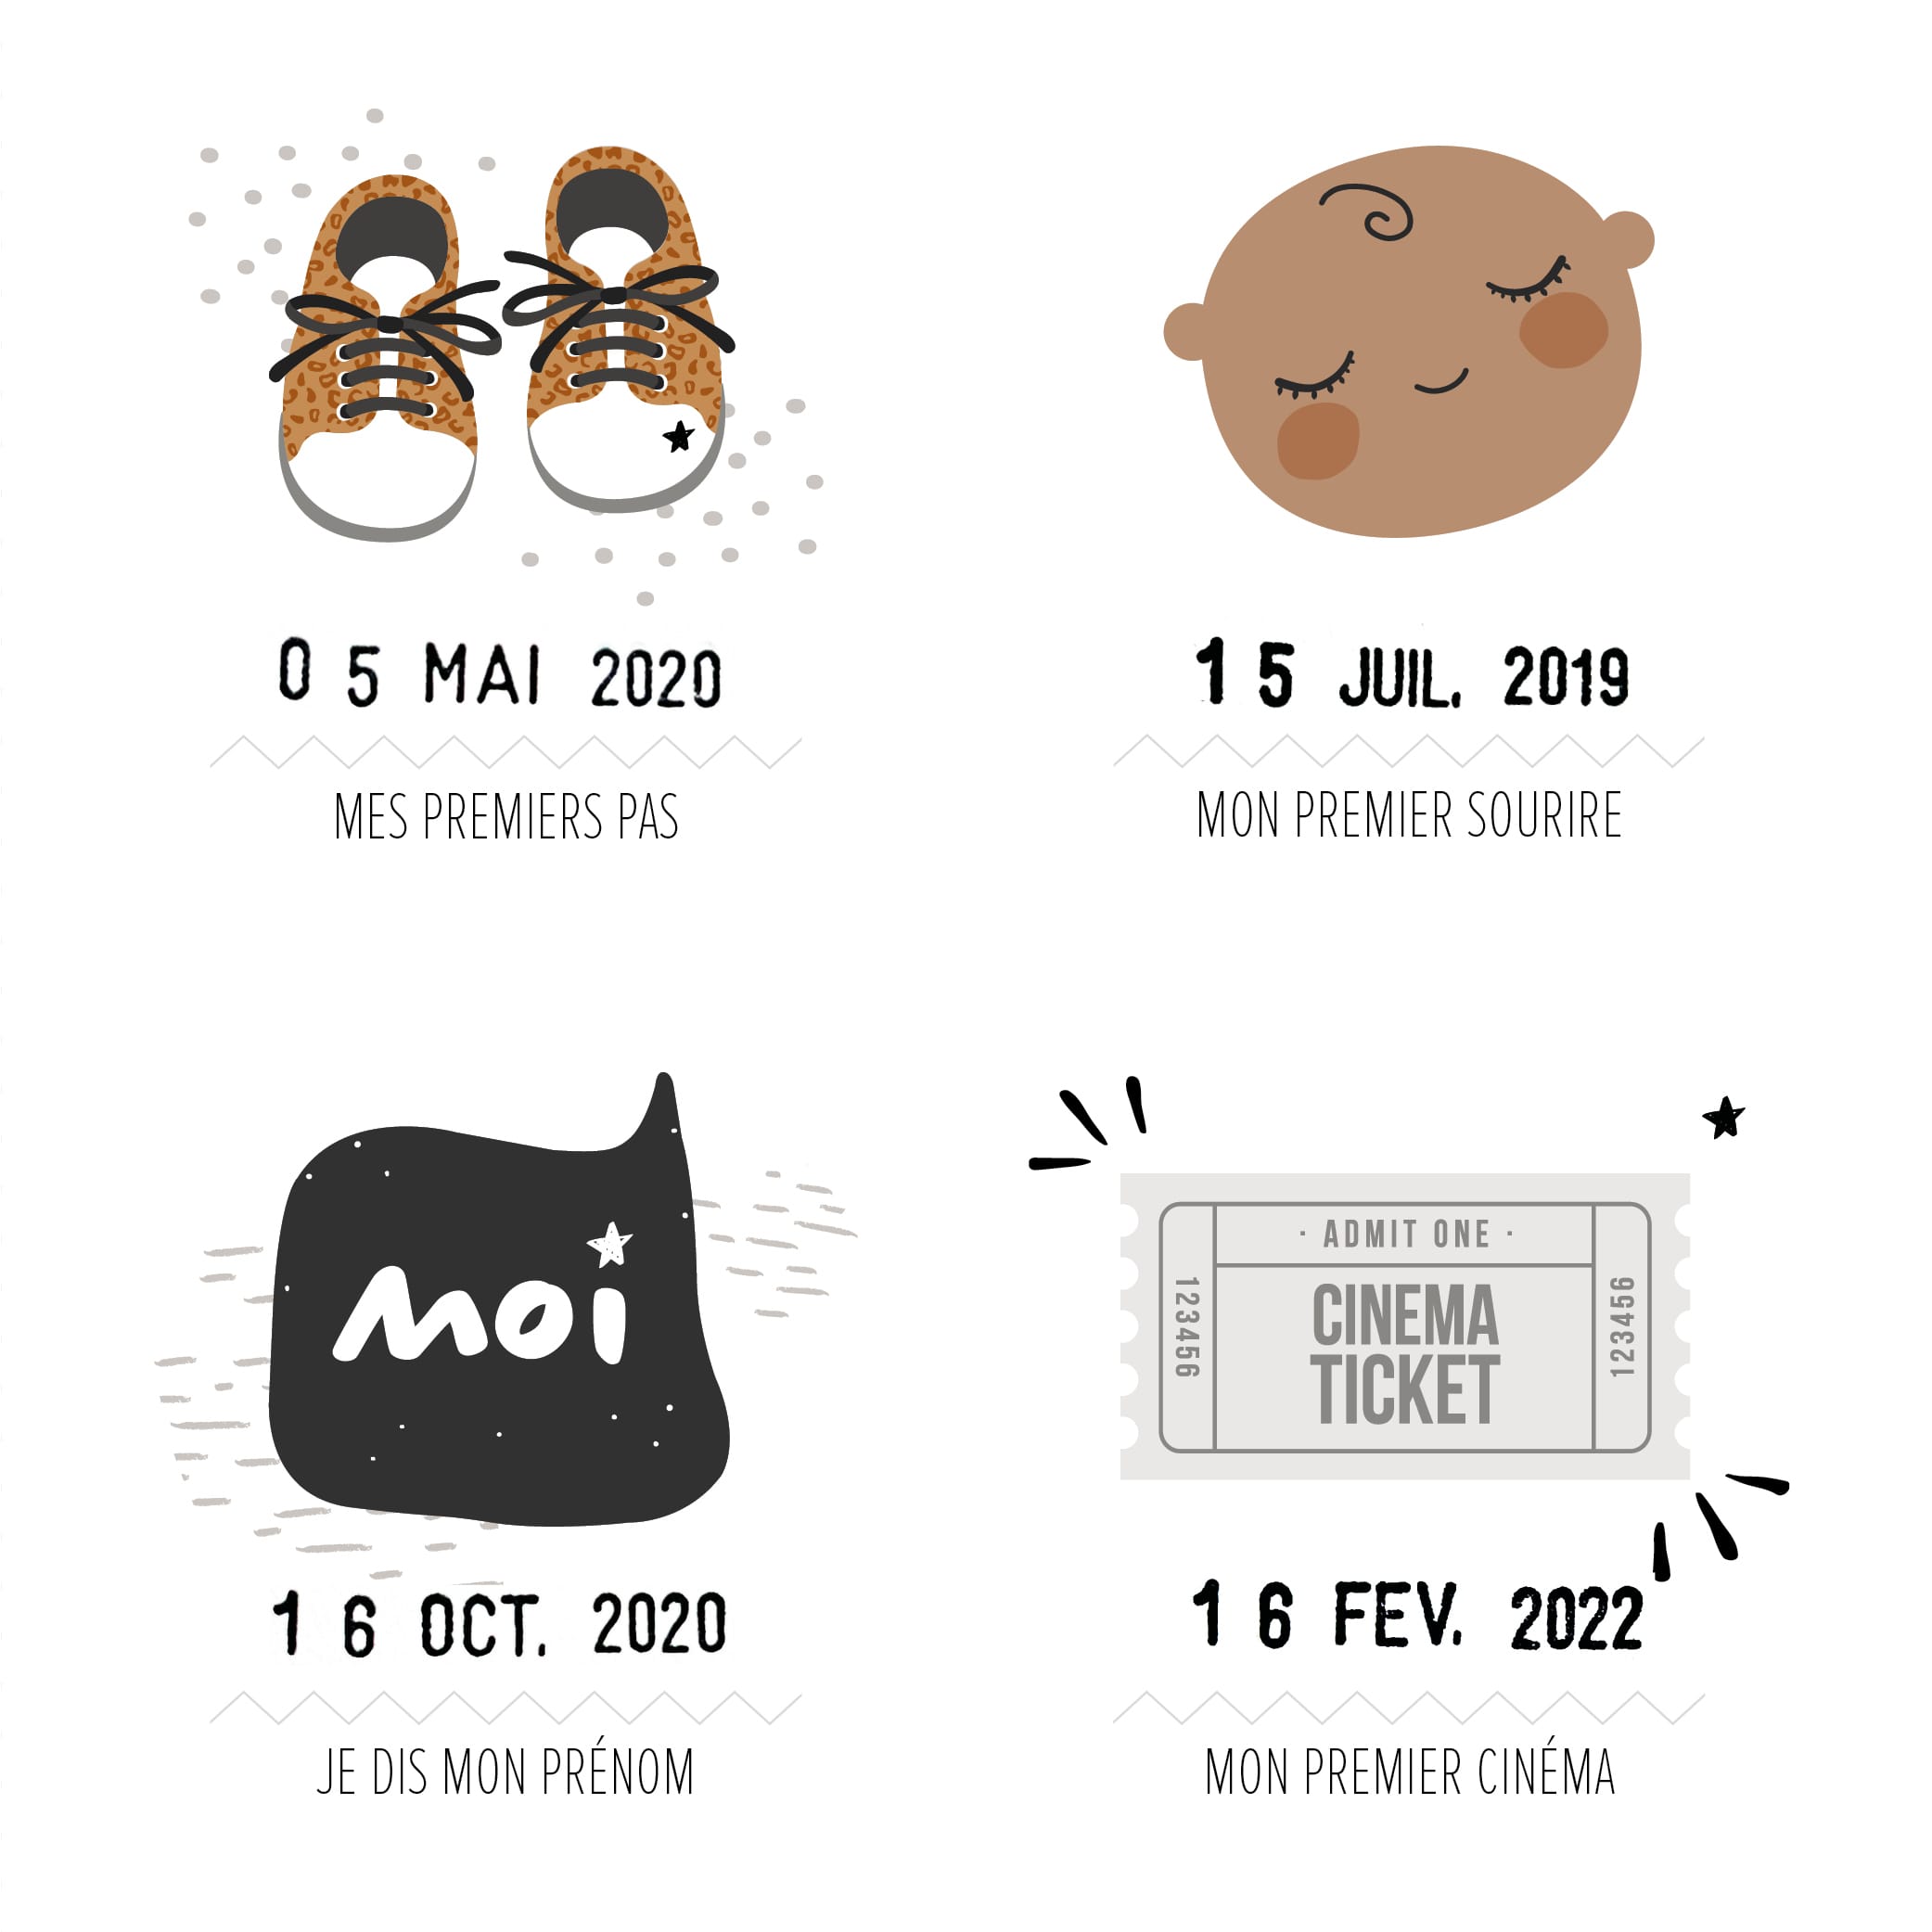 Mes Premières Fois Milestones poster and stamp - Dark skin par Les Petites  Dates 